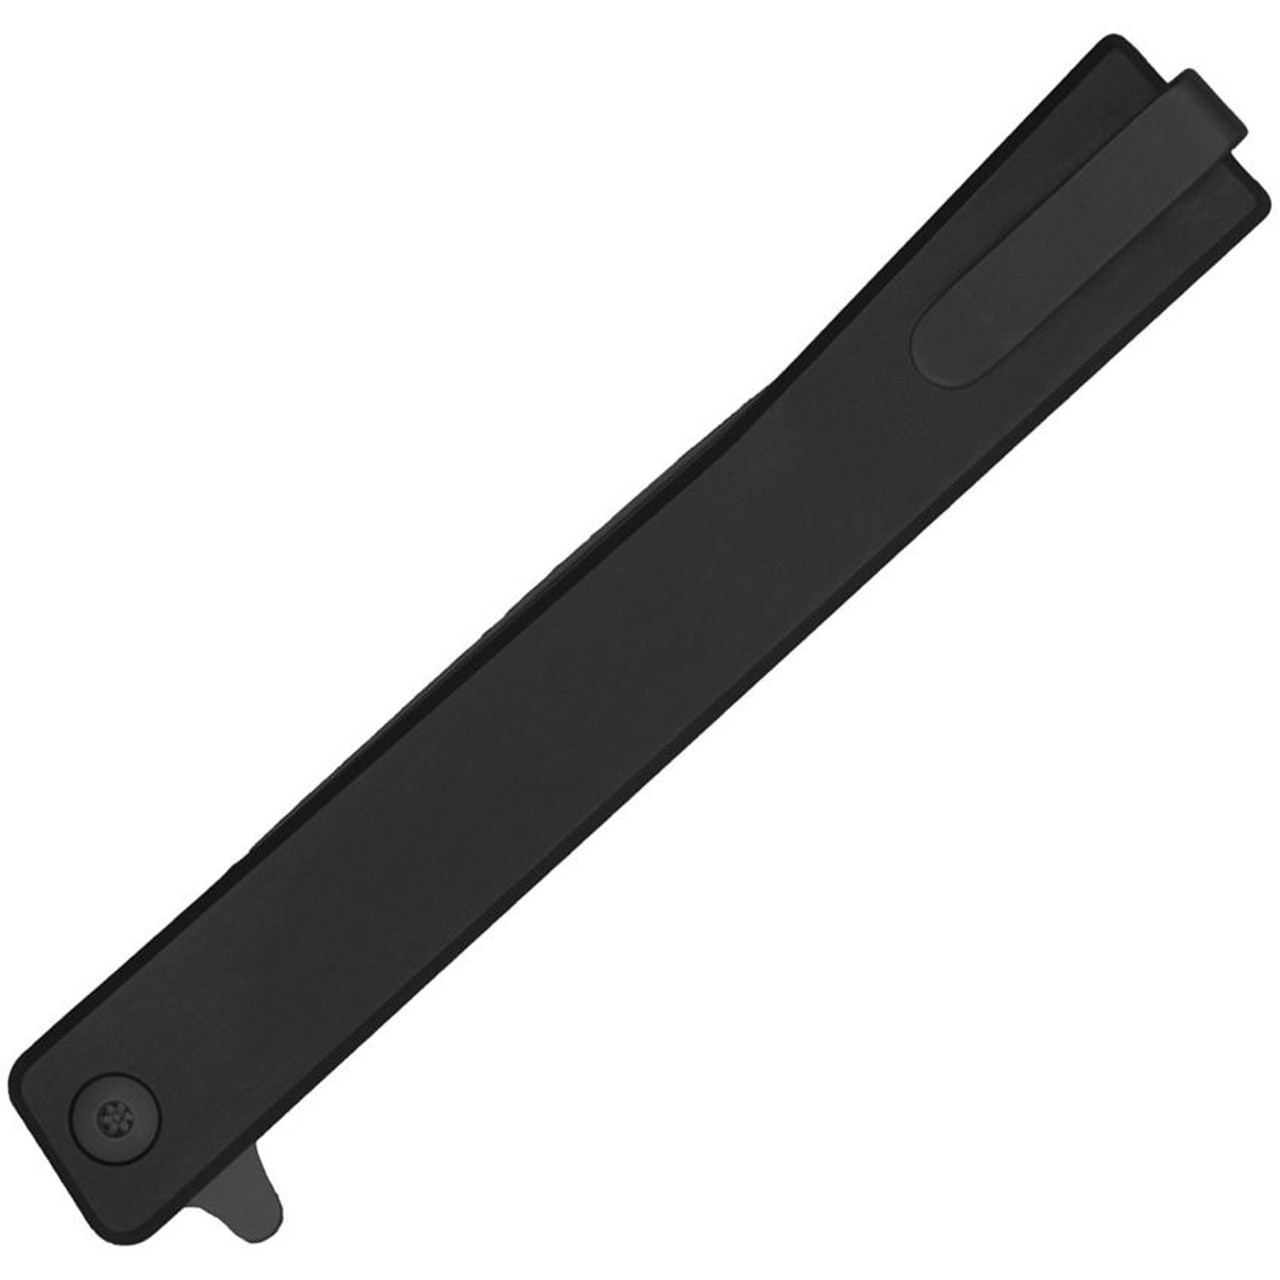 Ocaso The Solstice Folding Knife (OCS10CTB) 3.5" Black CPM-S35VN Straight Back Blade, Black Titanium Handle